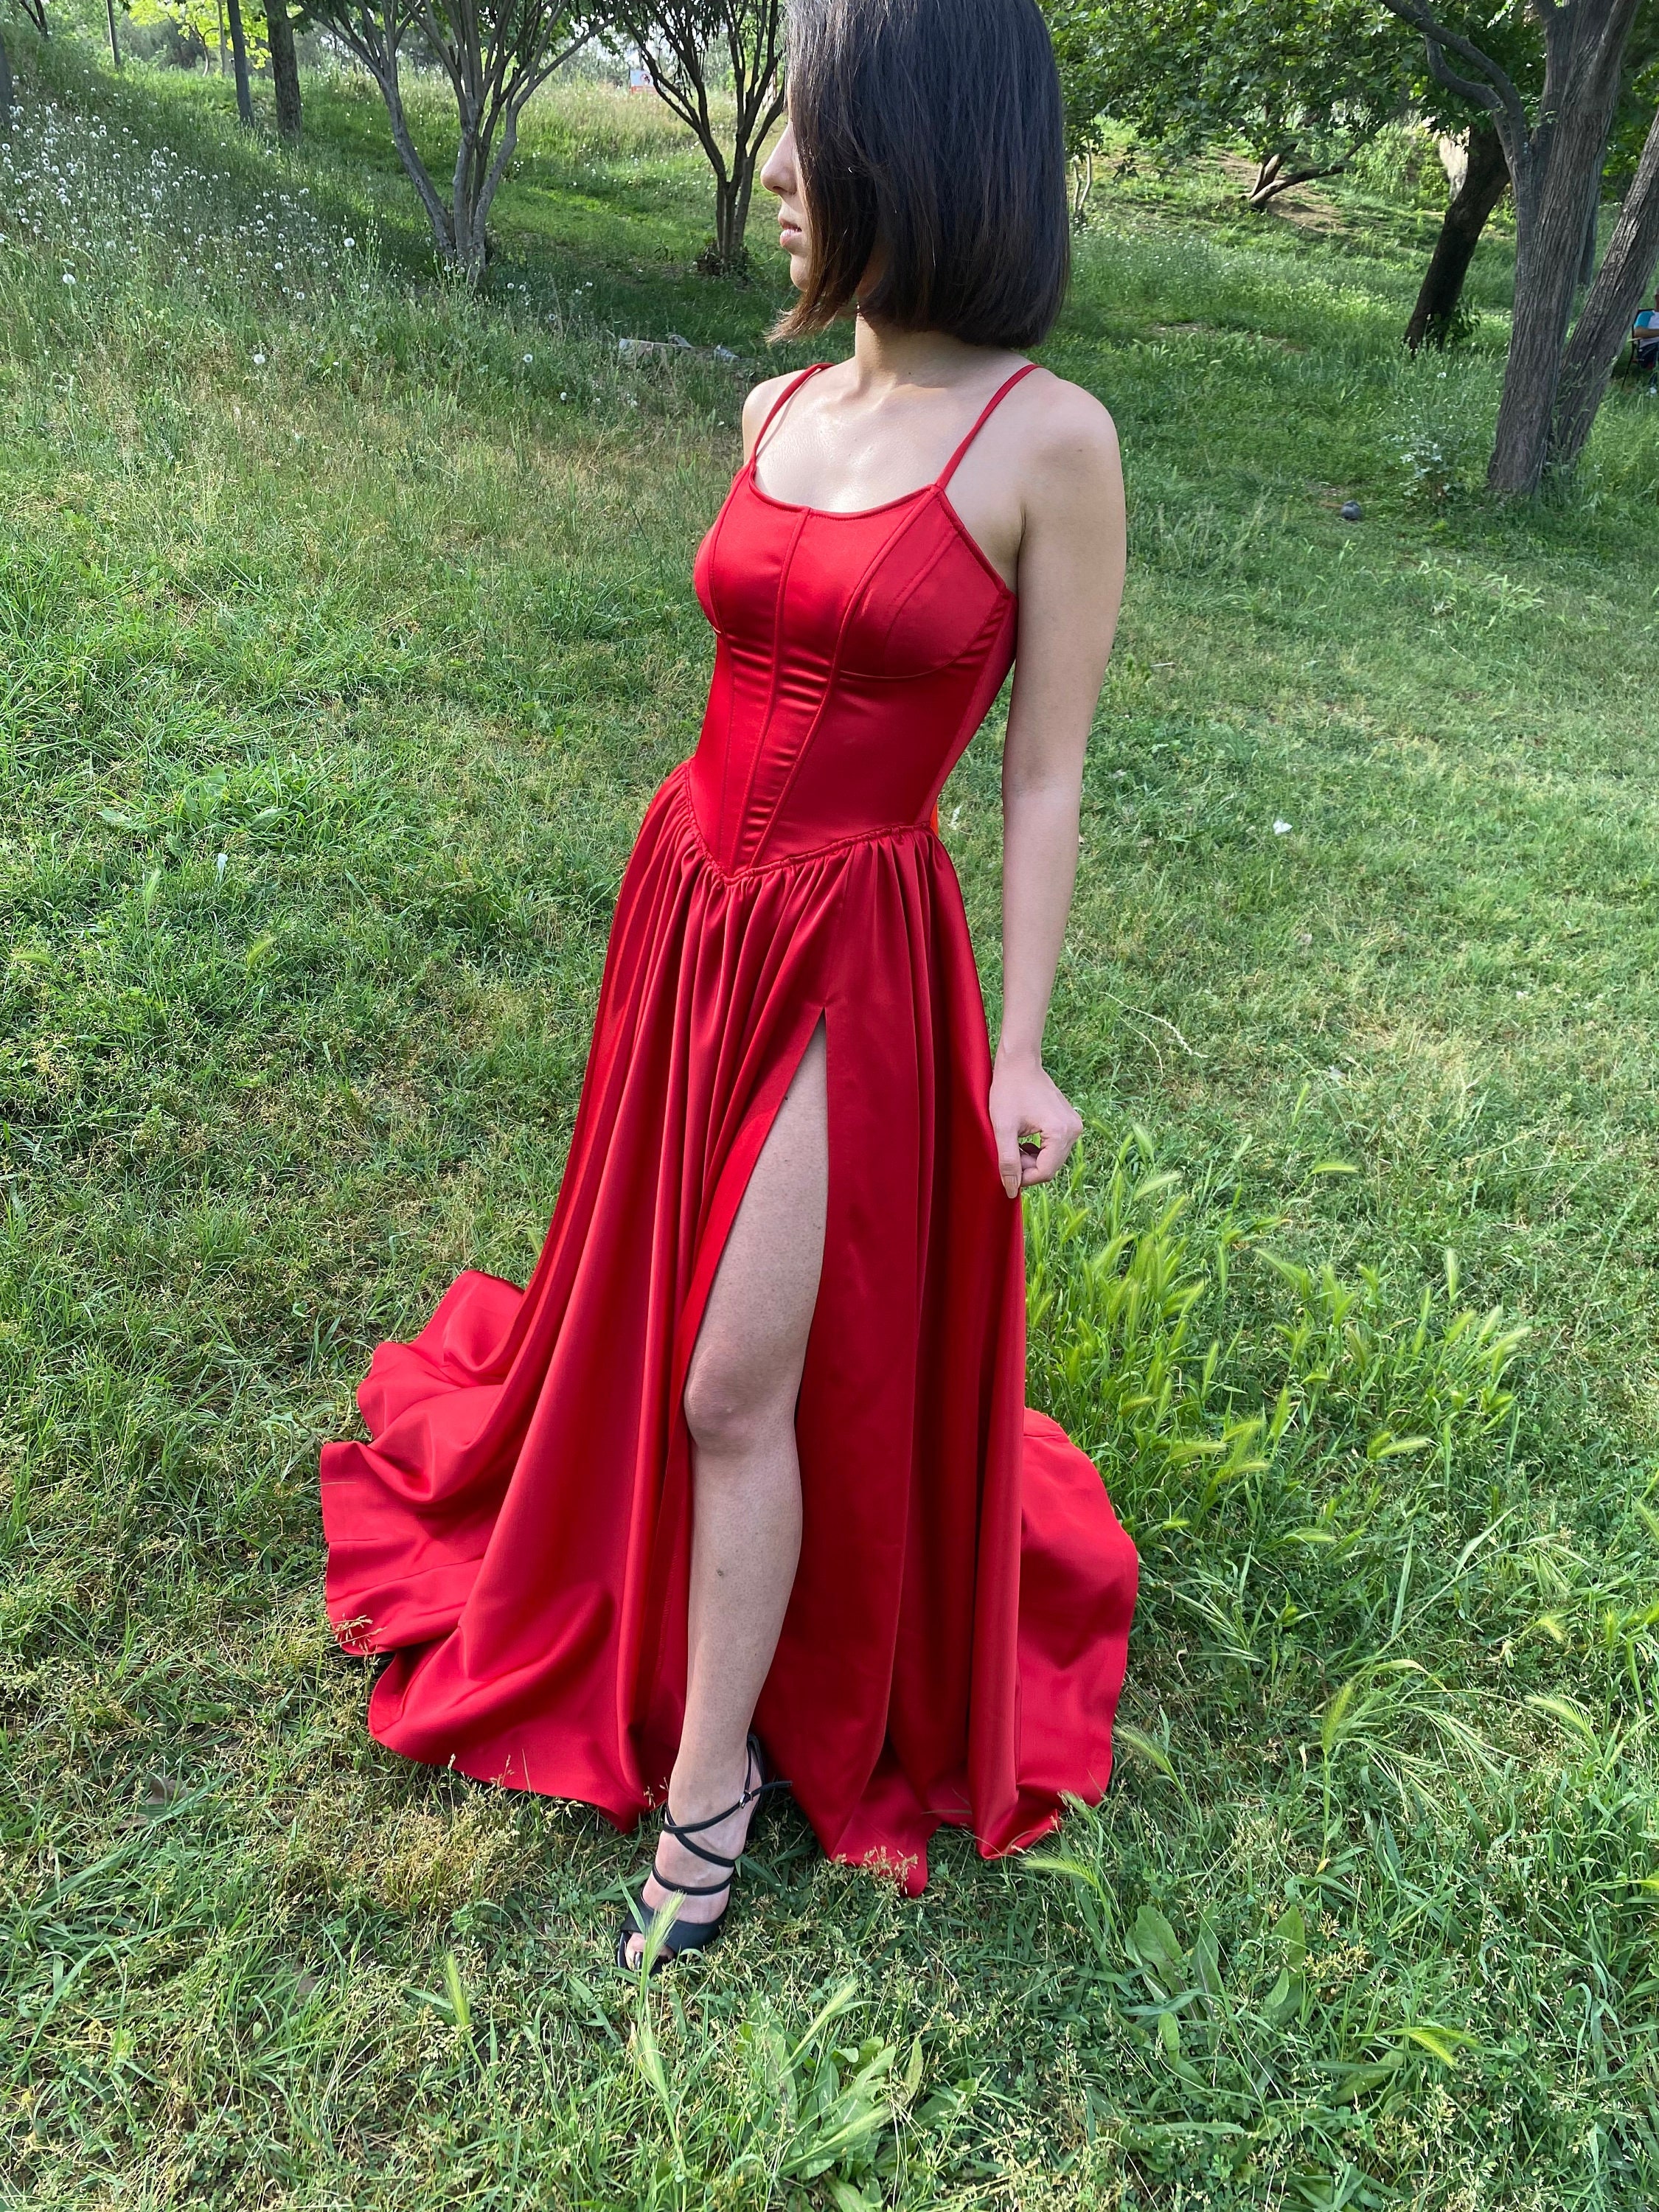 red slit dress